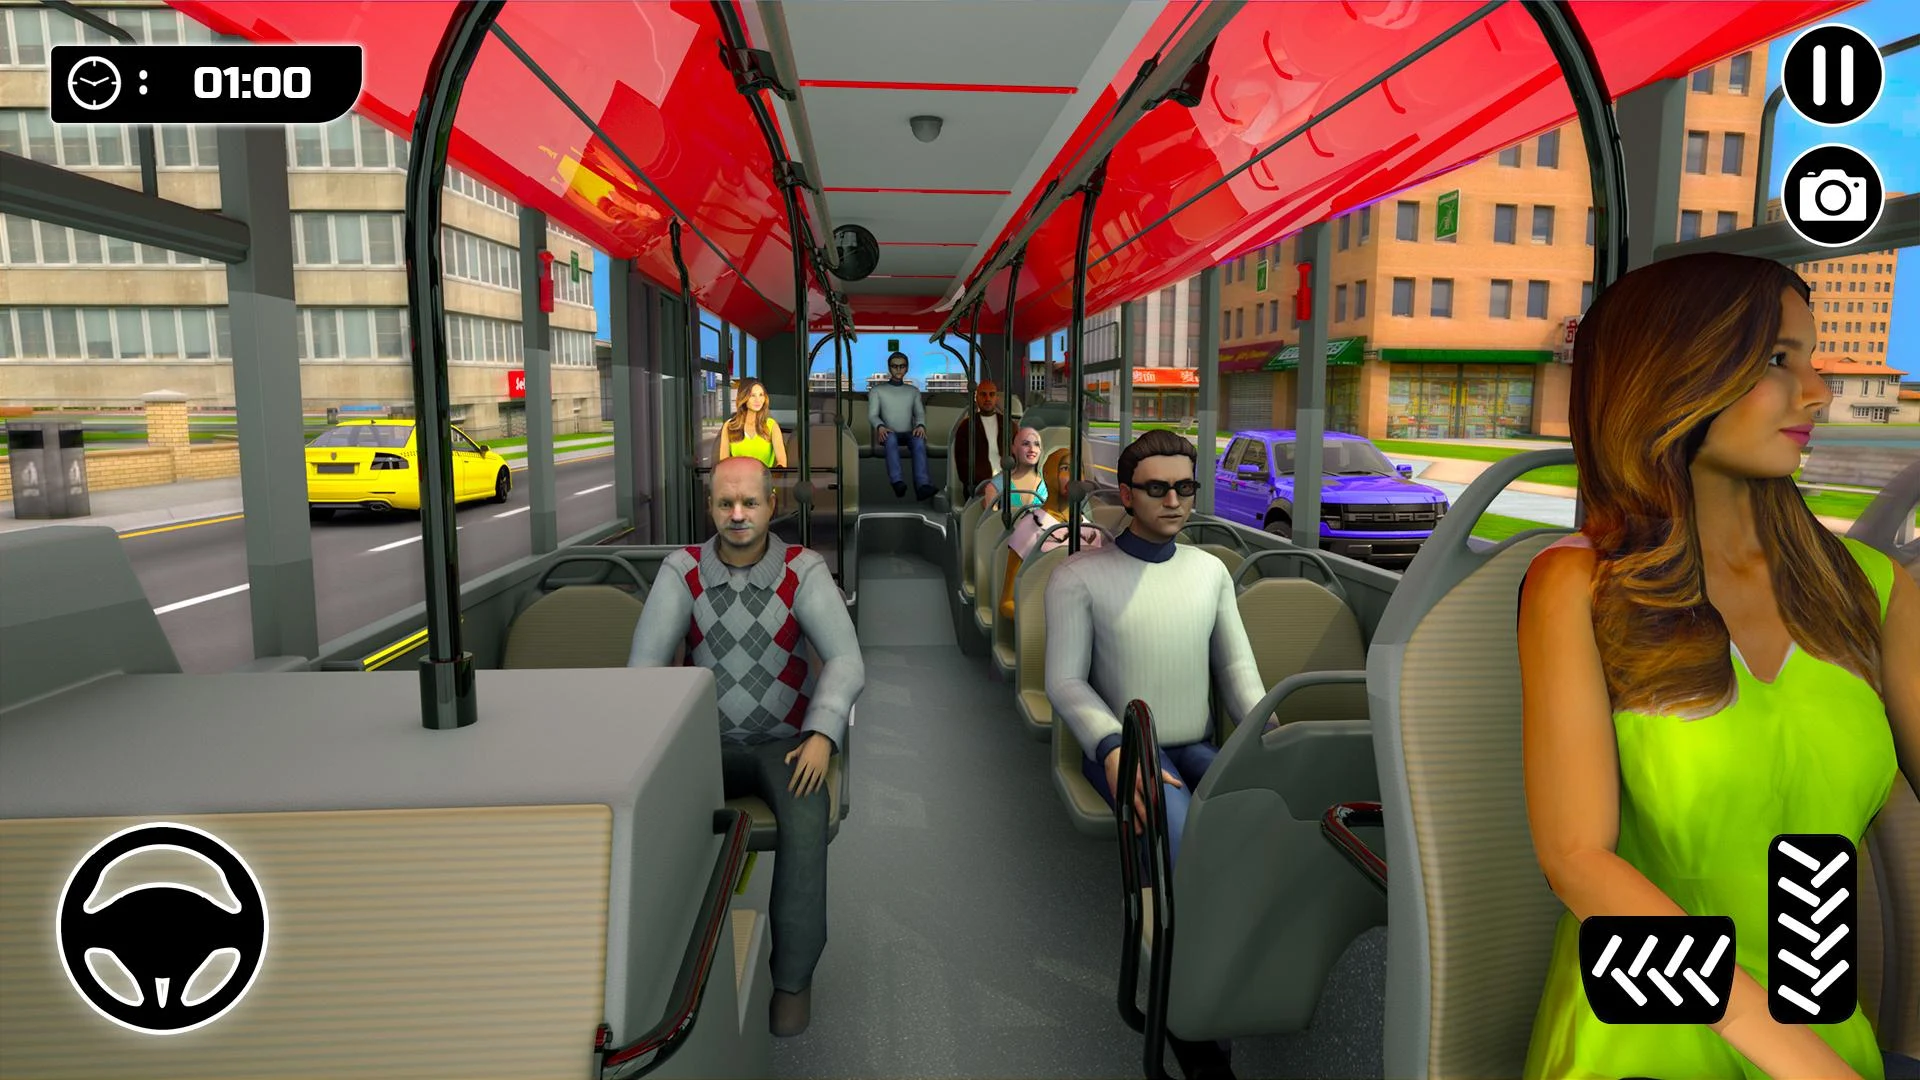 Coach Bus Simulator - Free Play & No Download